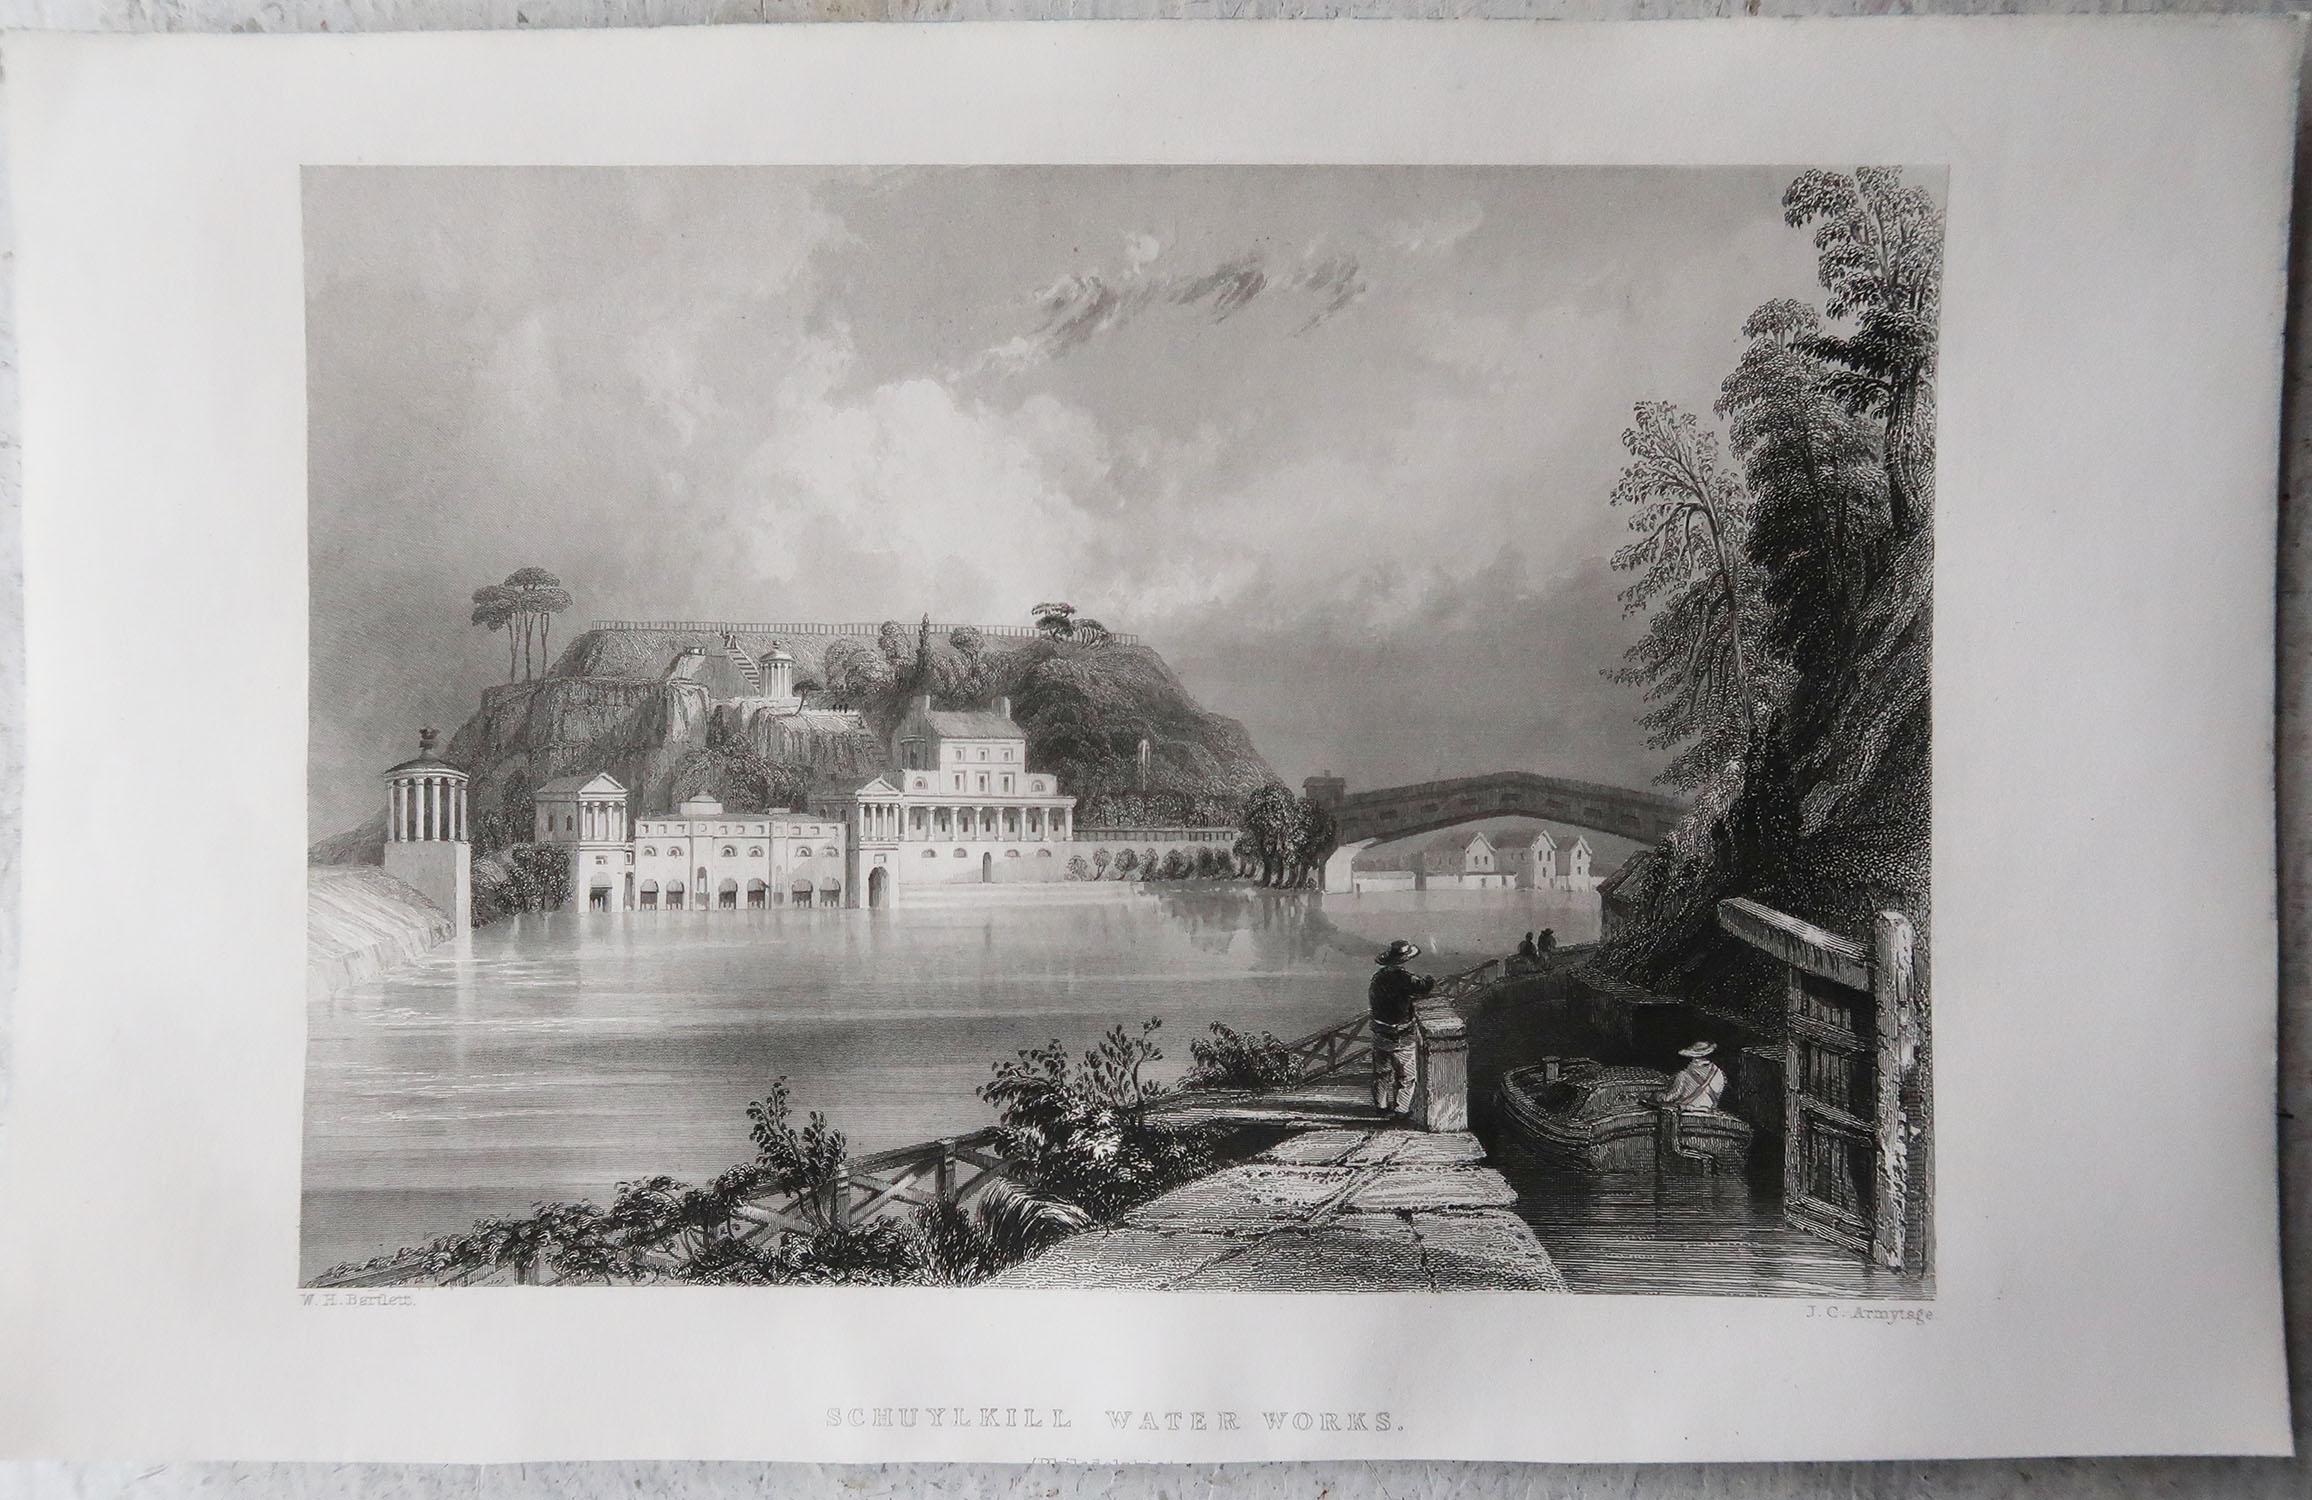 Other Original Antique Print of Schuylkill Water-Works, Philadelphia, Pennsylvania